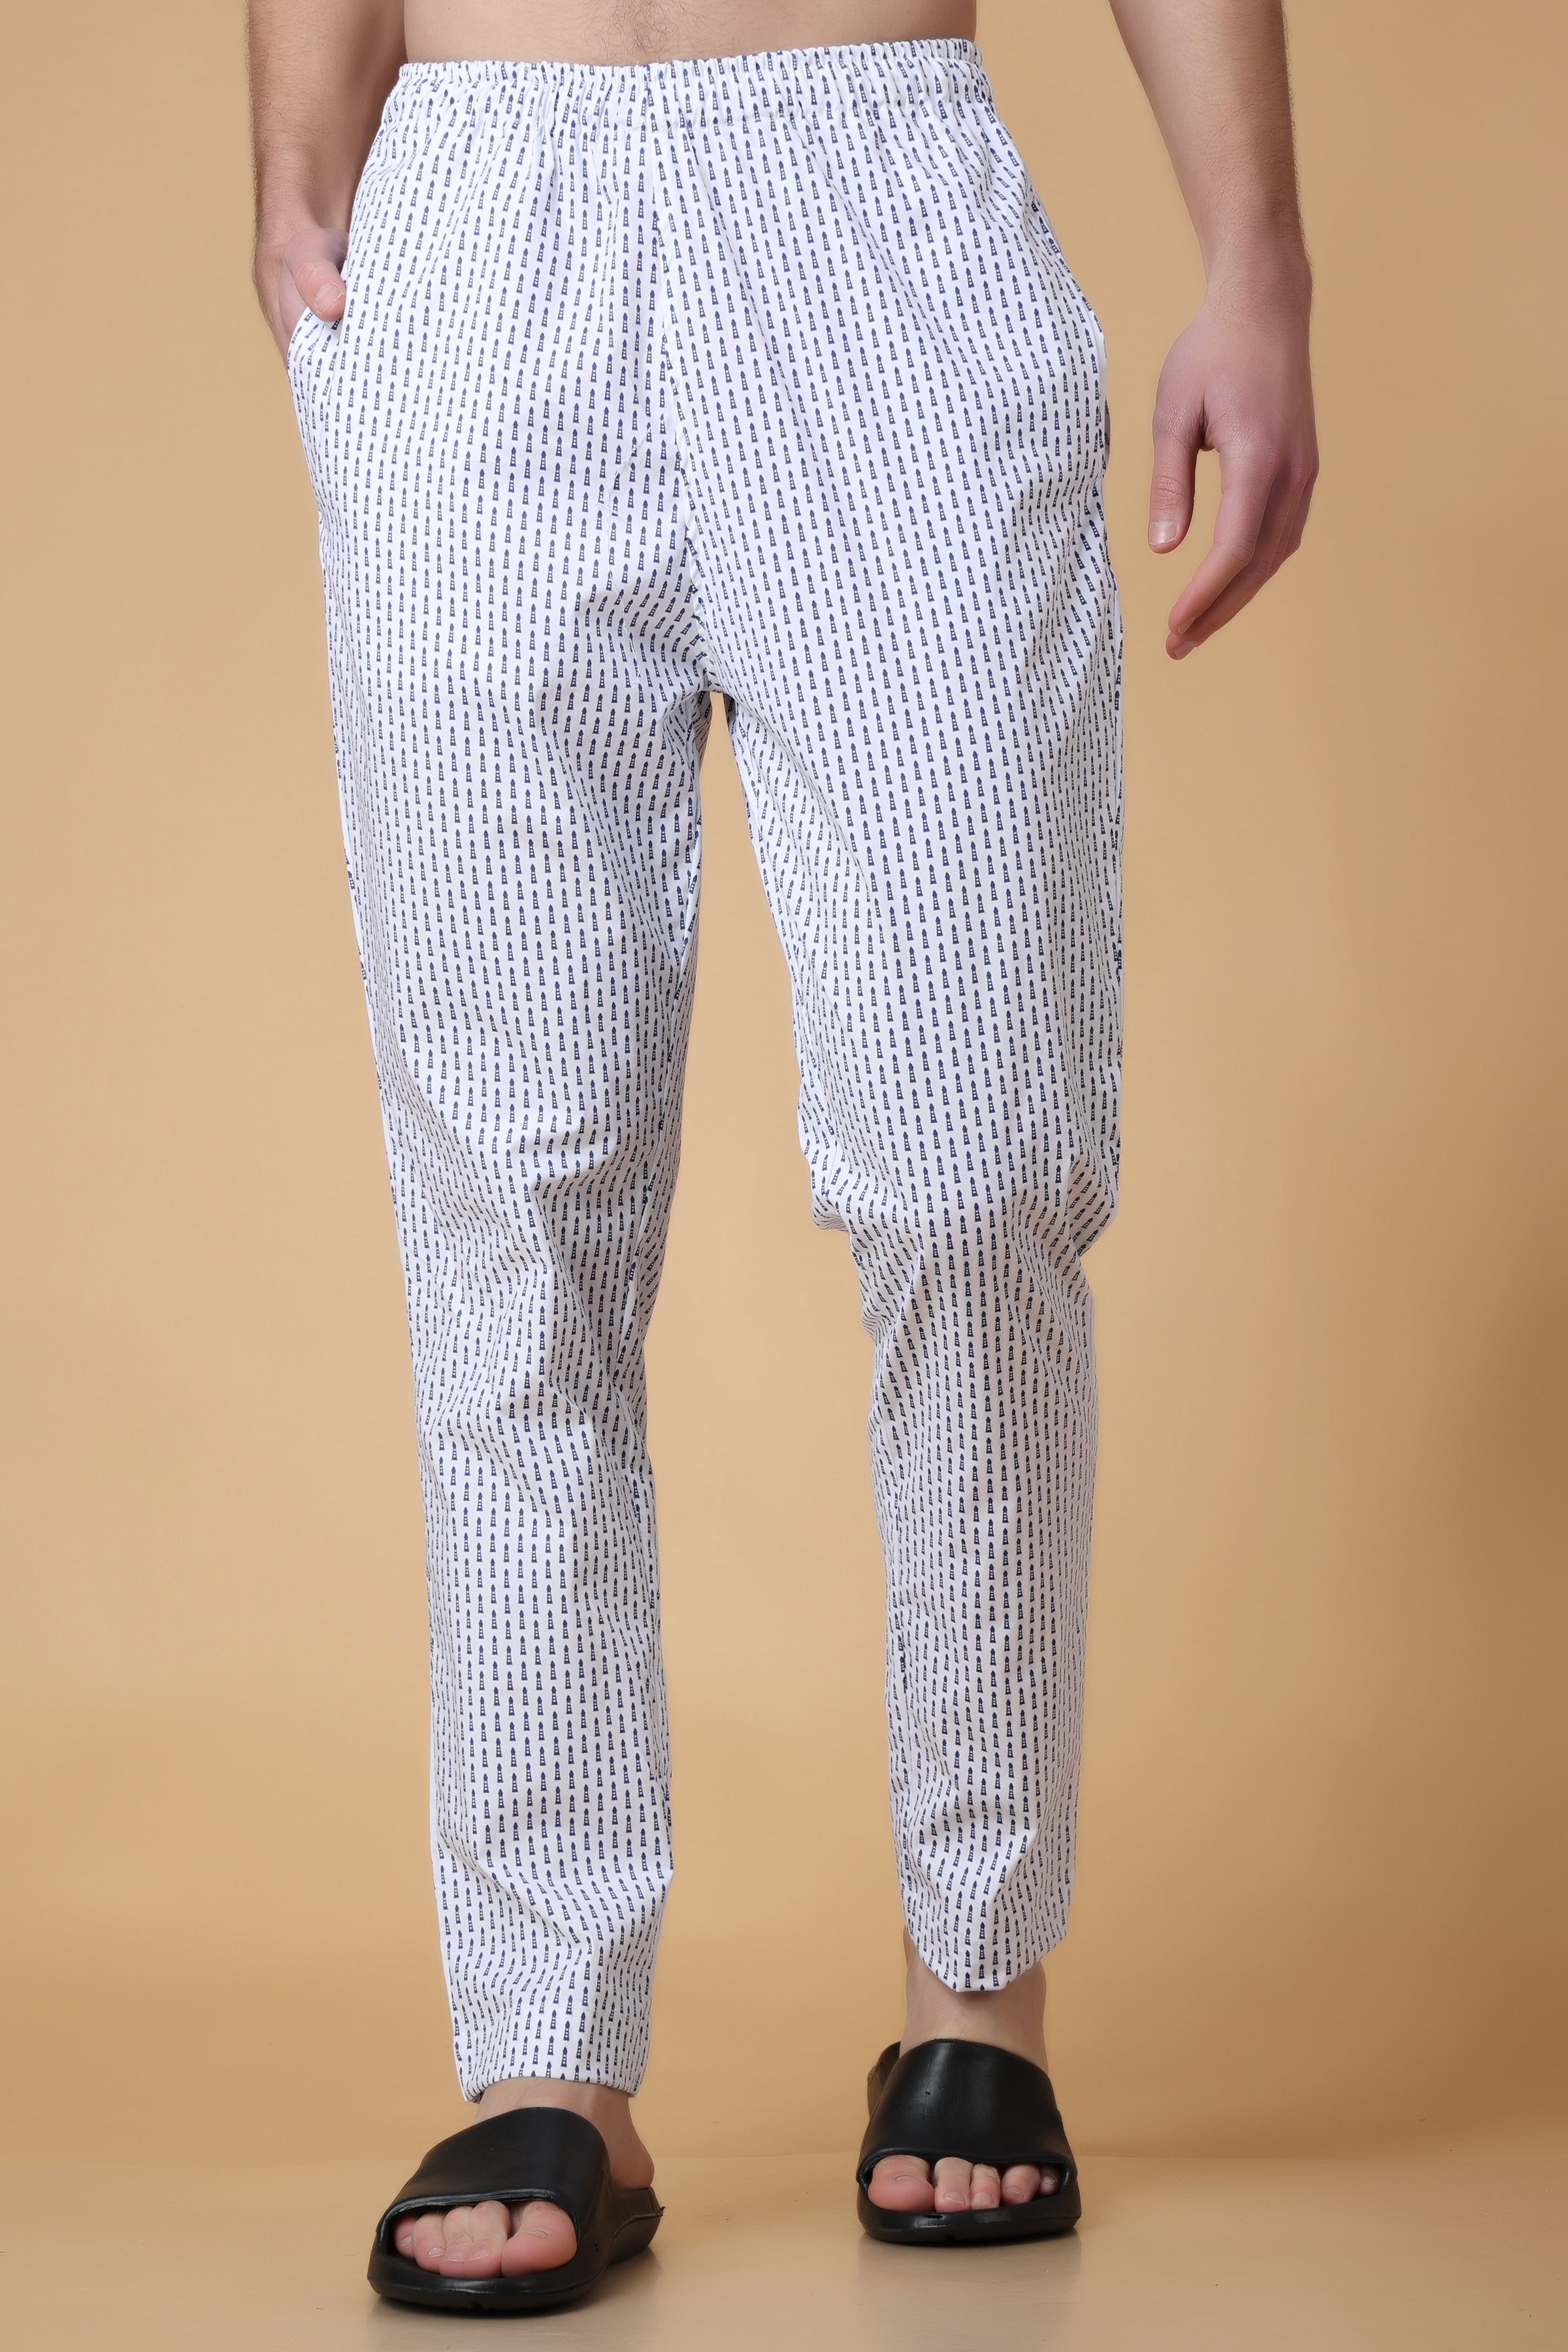 Buy Pajama Pants Mens & Cotton Pajamas For Men - Apella